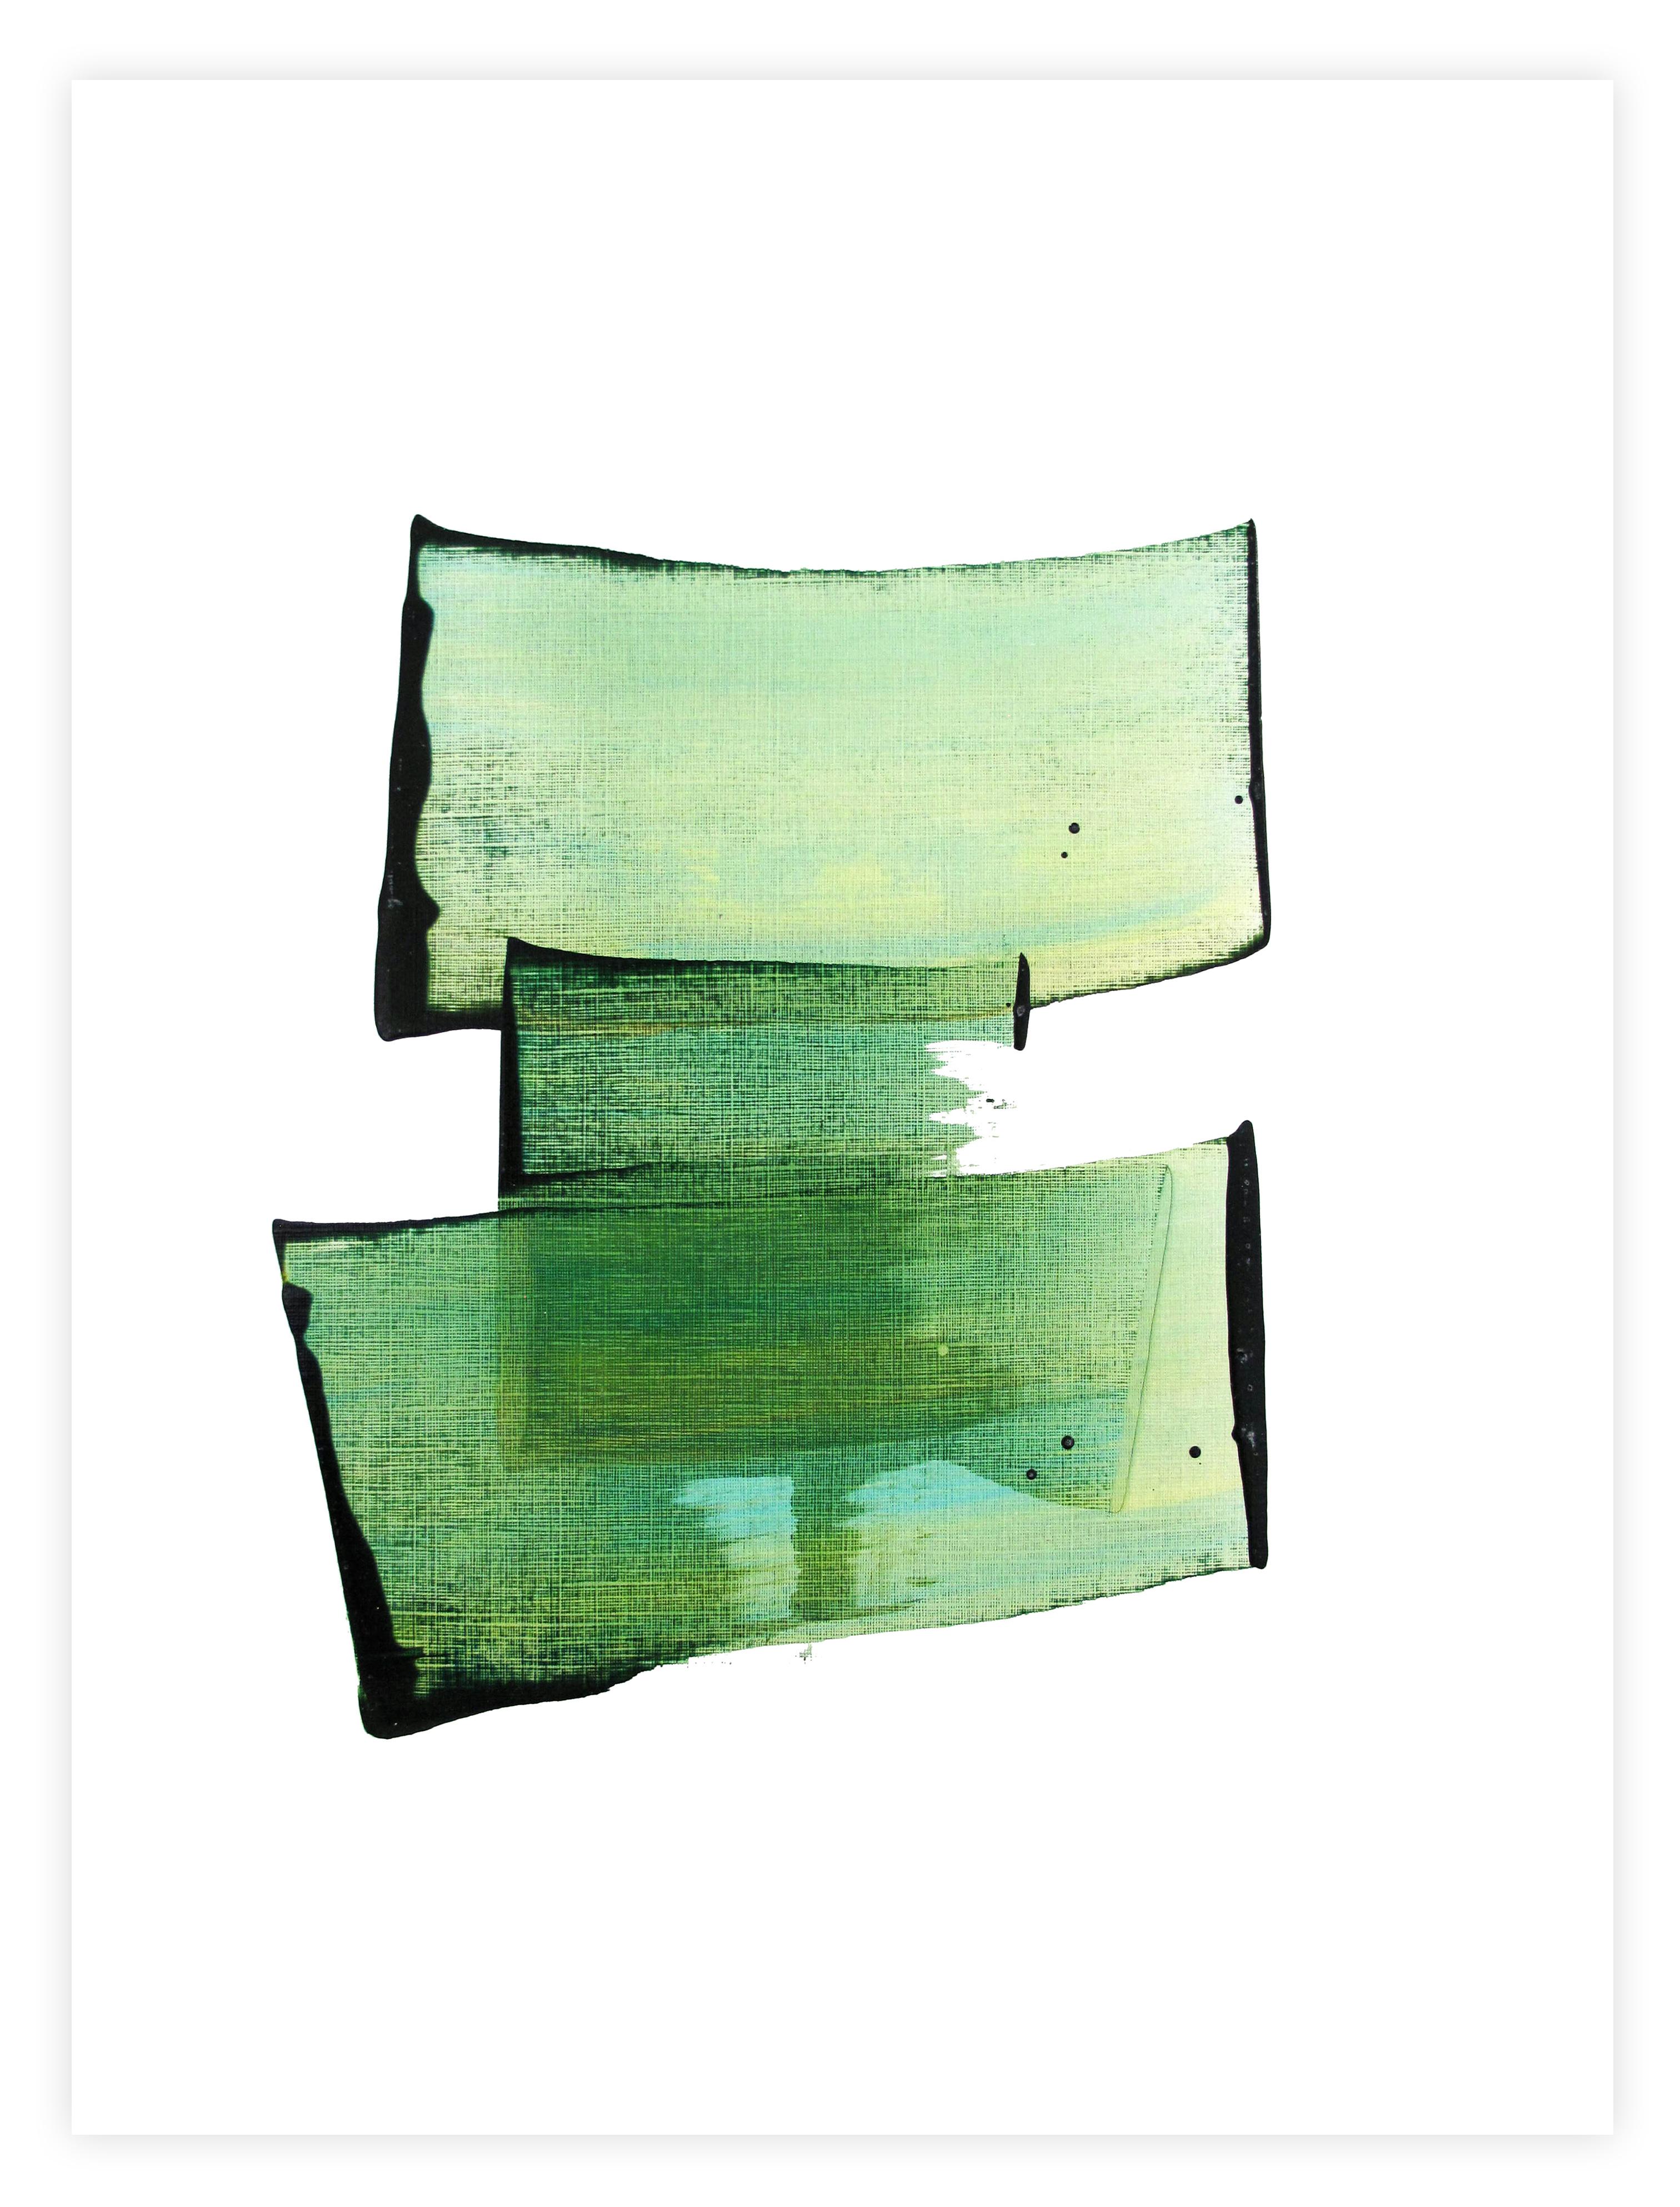 Abstract Drawing Emma Godebska - 10 verts dorés (peinture abstraite)